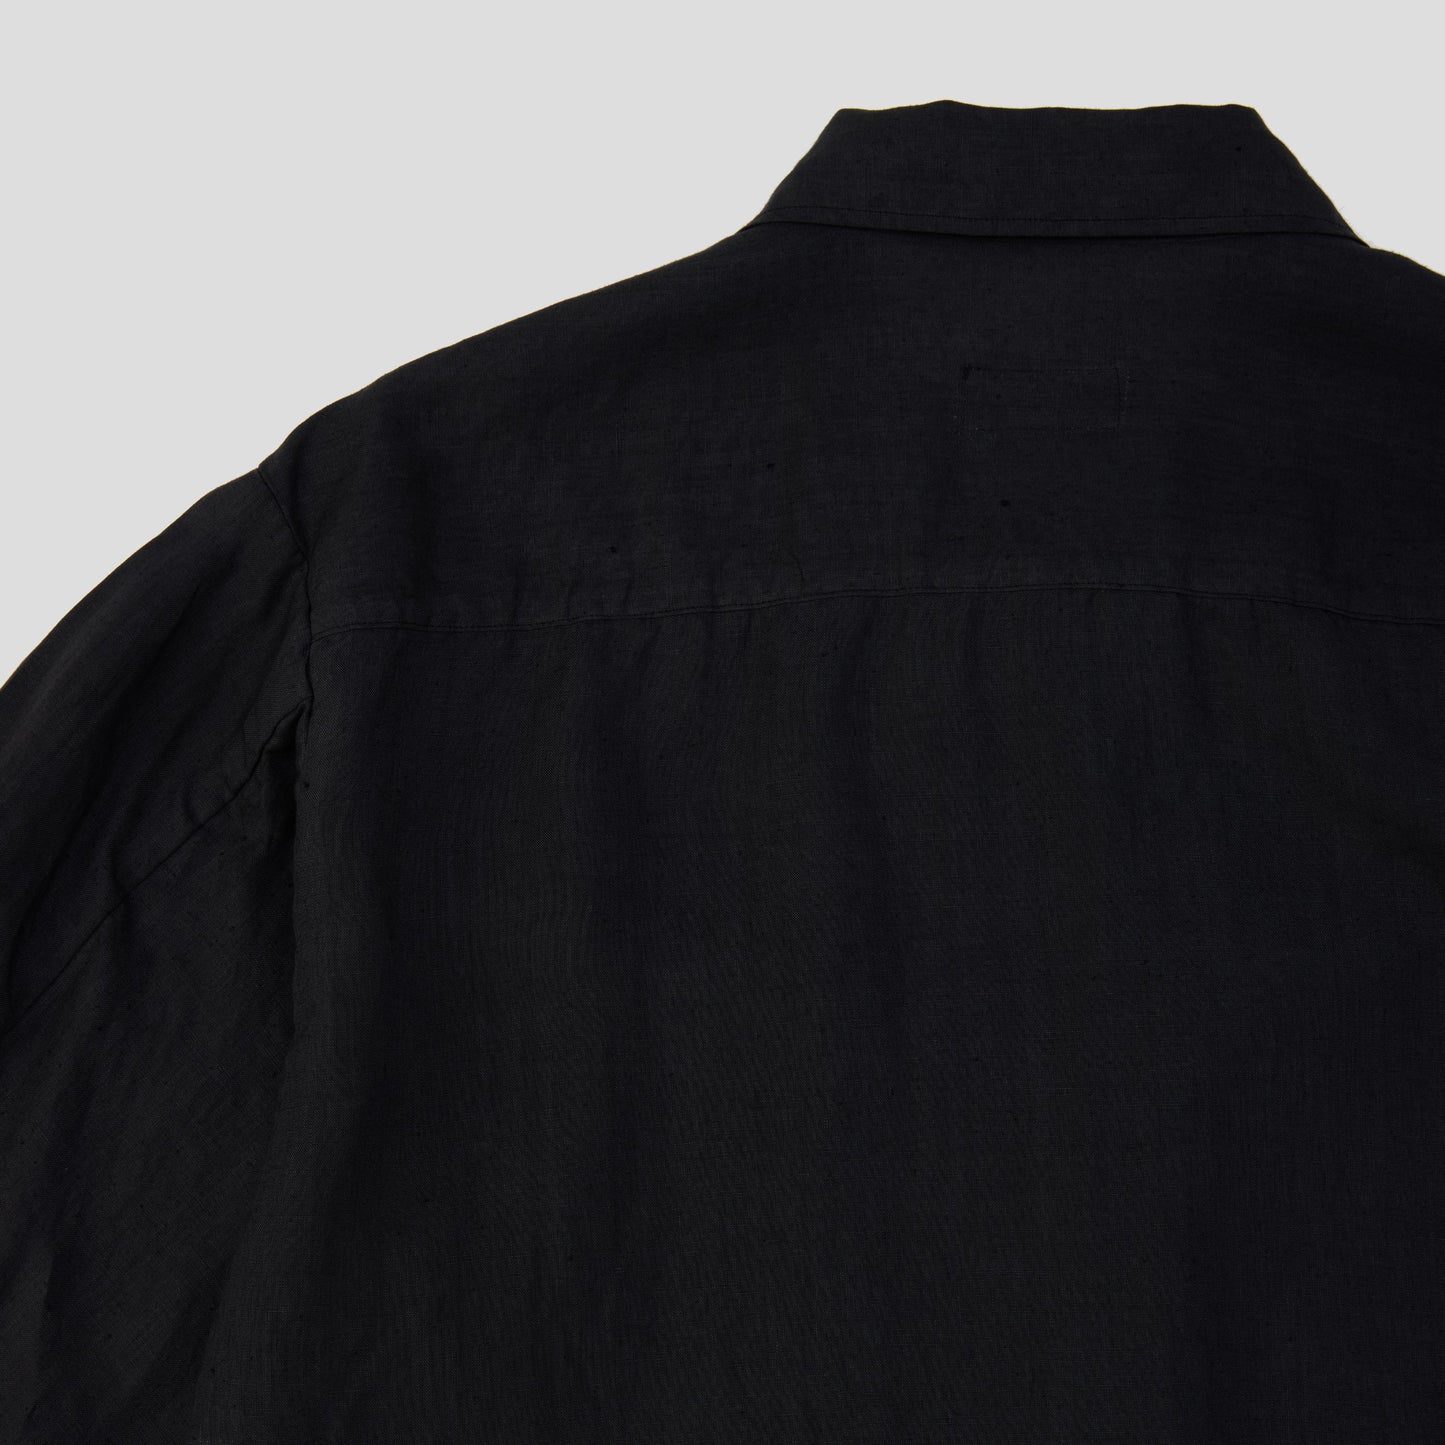 SH-FTGJ-004 INK BLACK LINEN (Garment Dye)